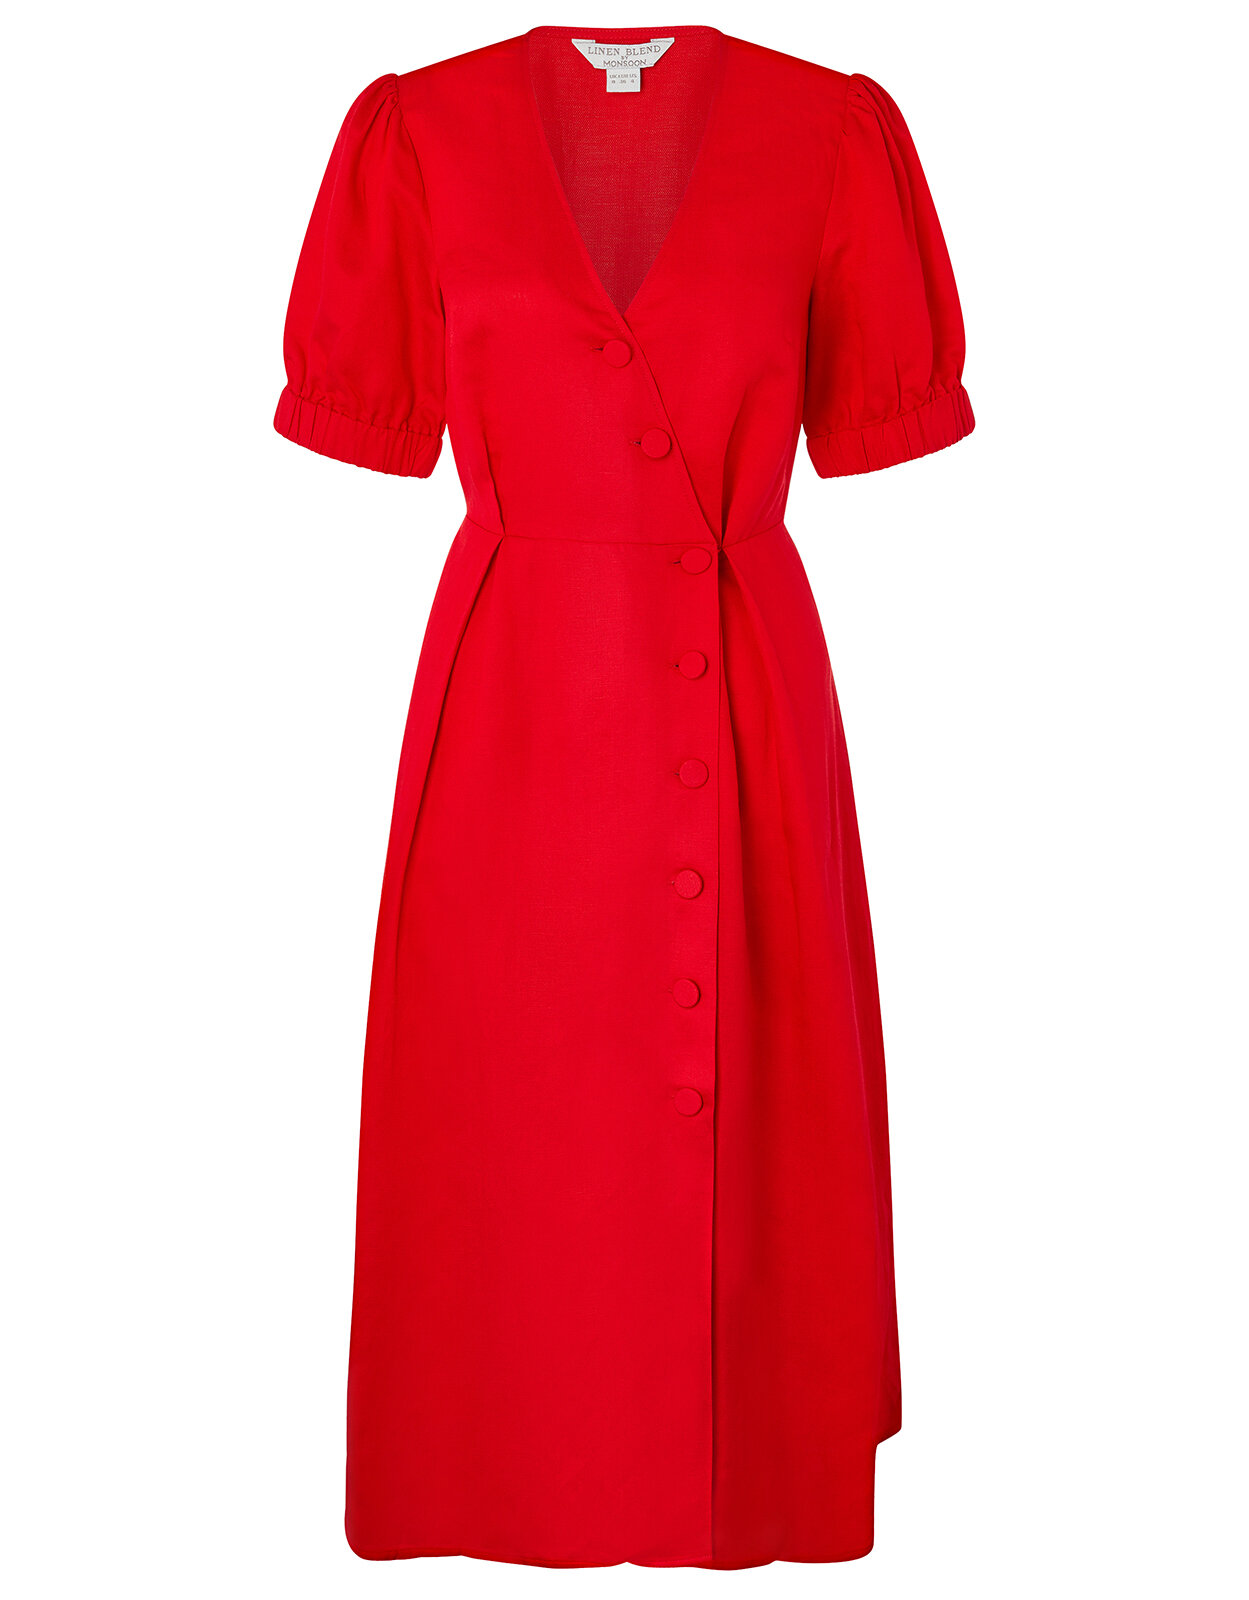 Dress, £65, Monsoon